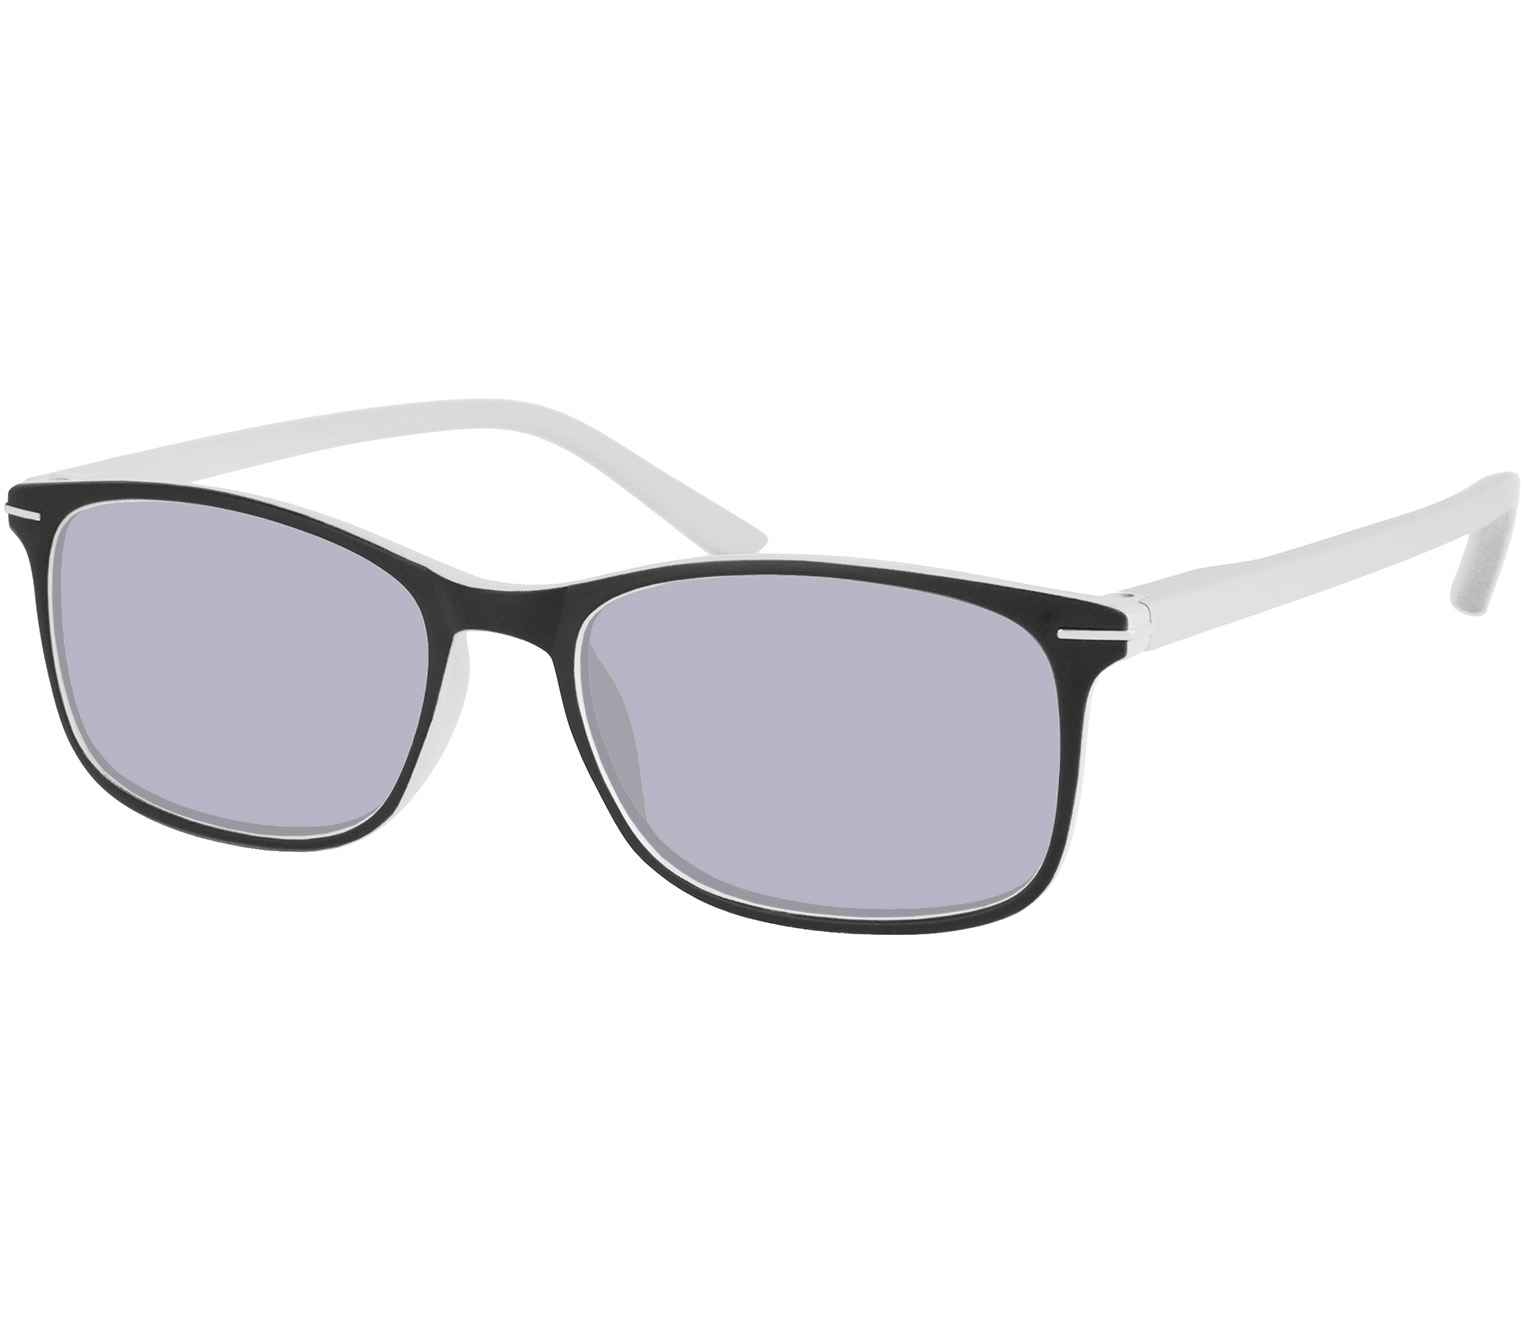 Main Image (Angle) - Esprit (White) Sunglasses